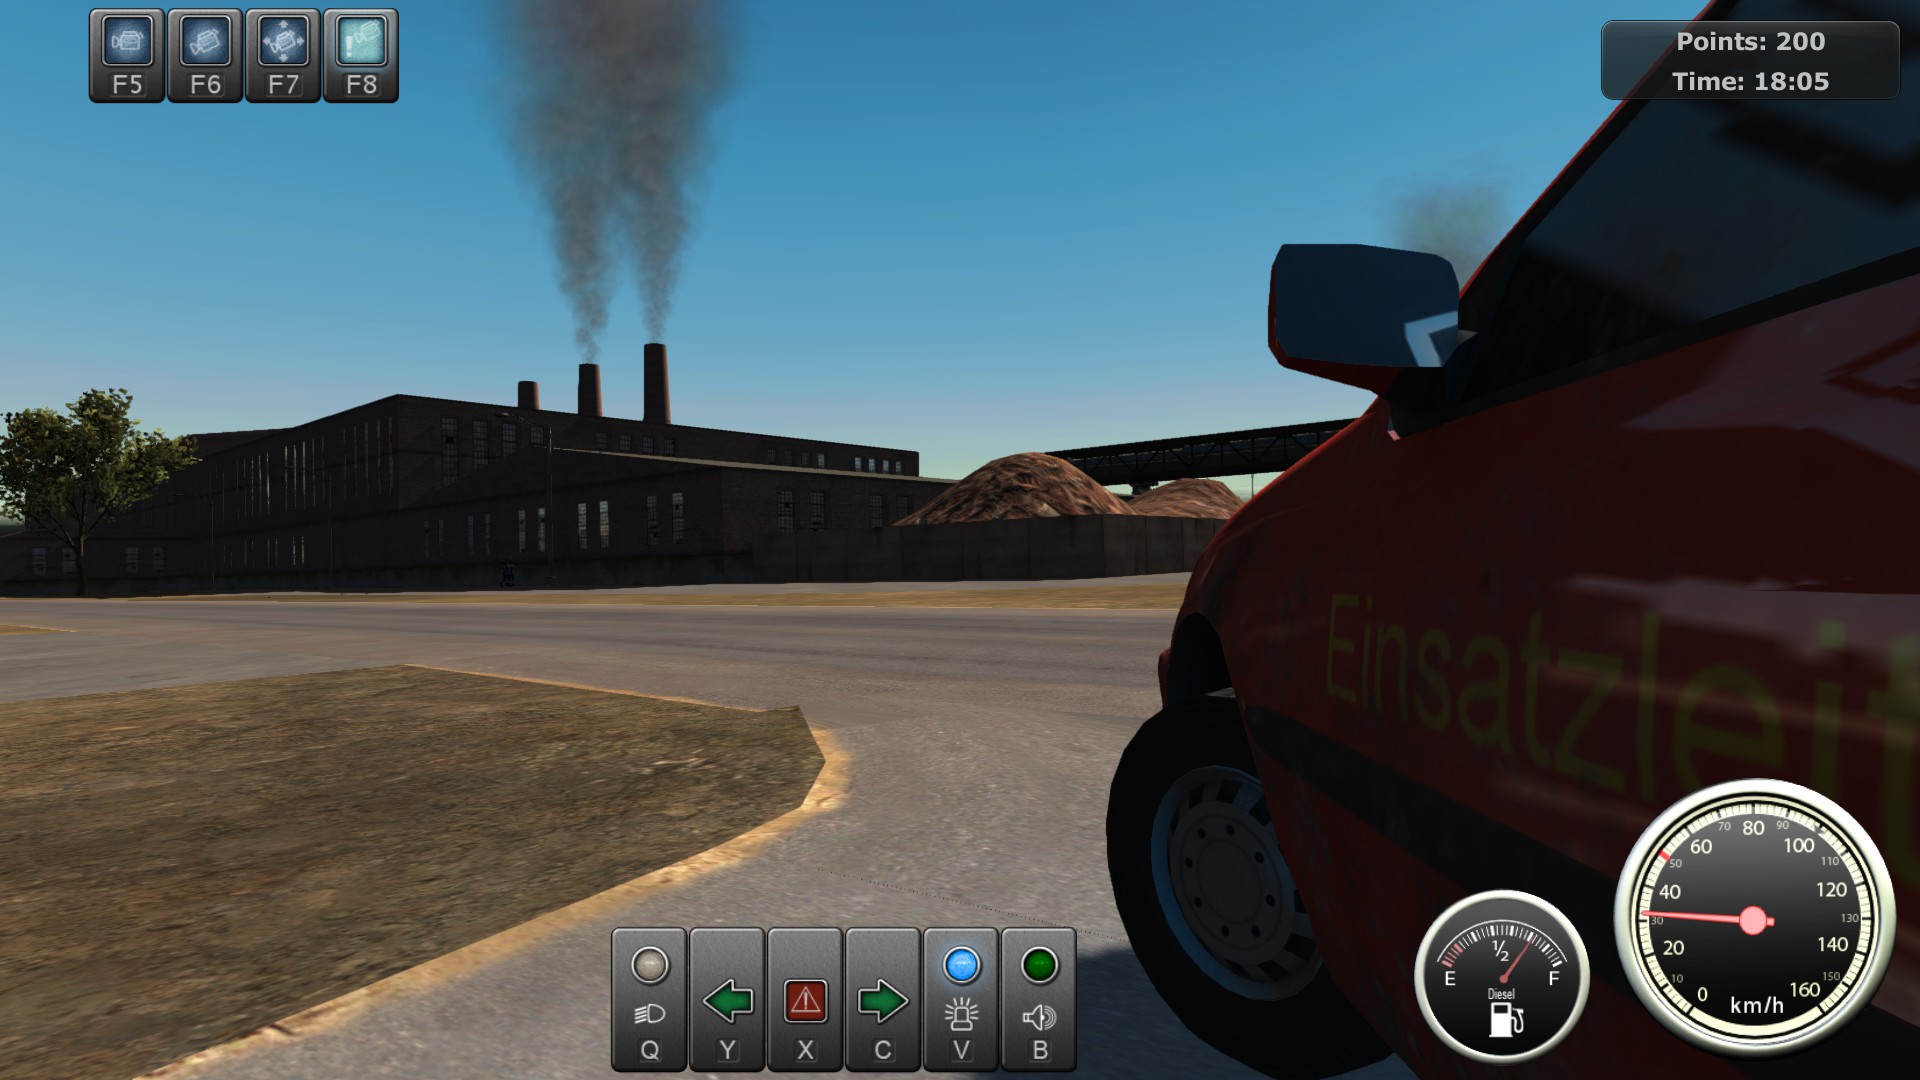 Plant Fire Department - The Simulation screenshot